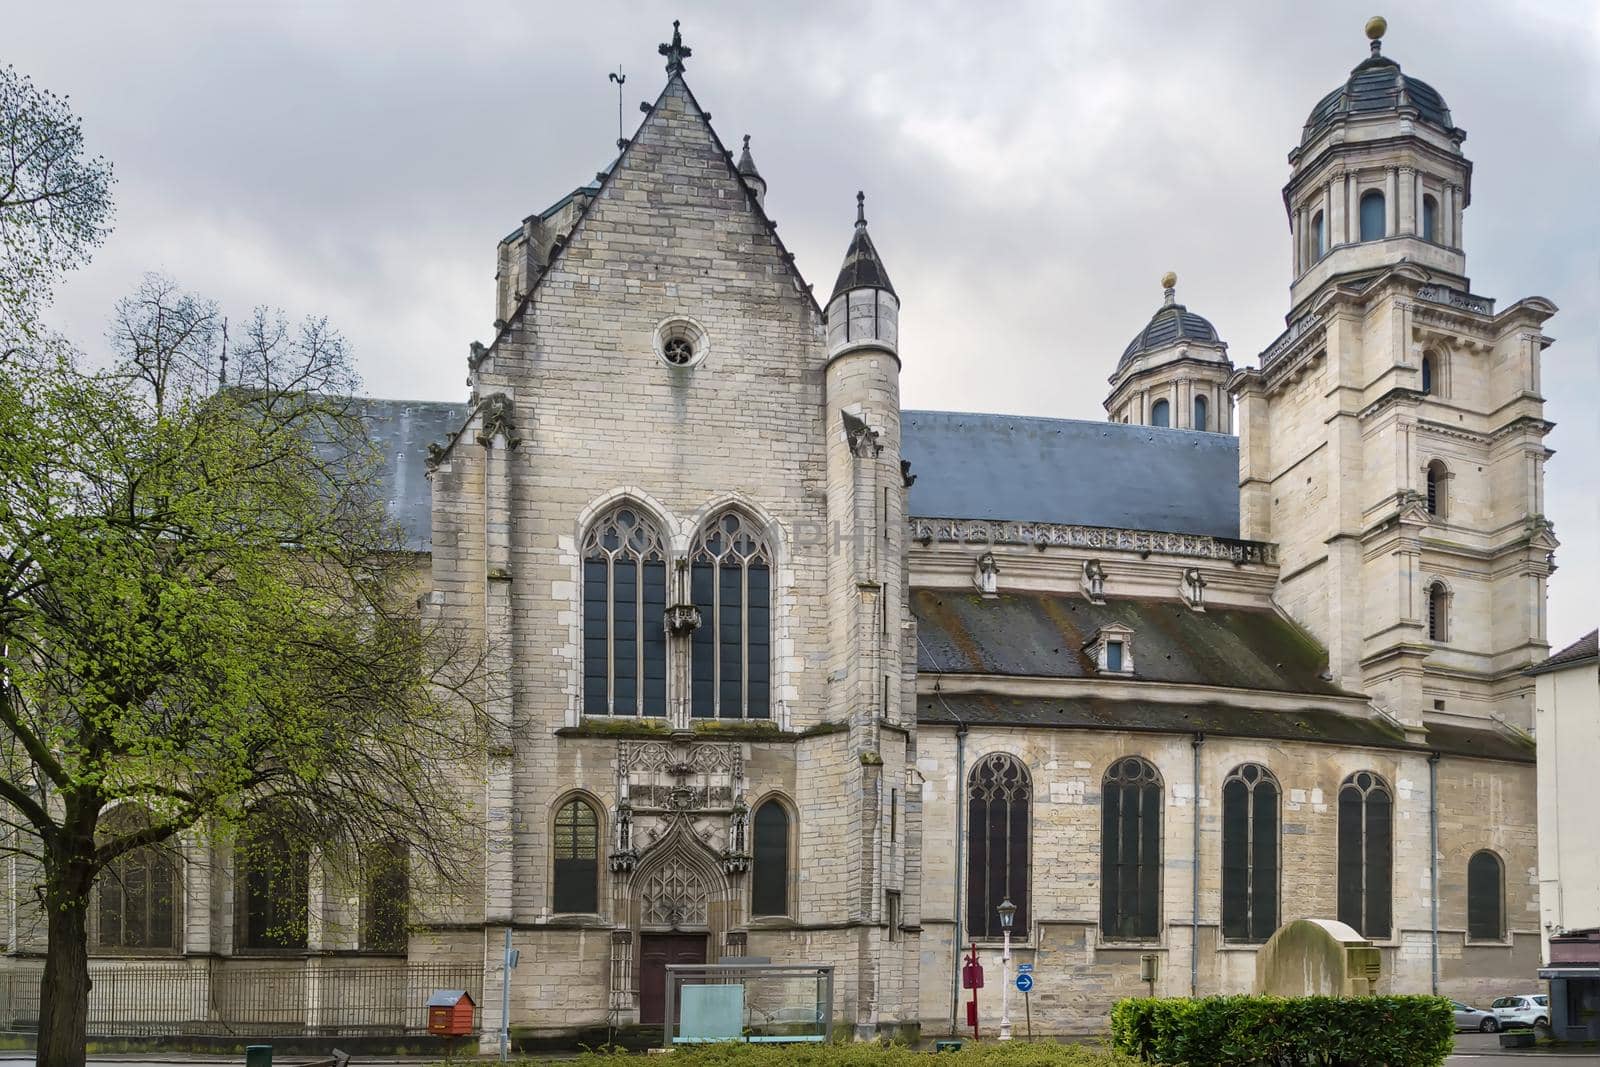 Saint Michel Church from 16 century in Dijon, France.